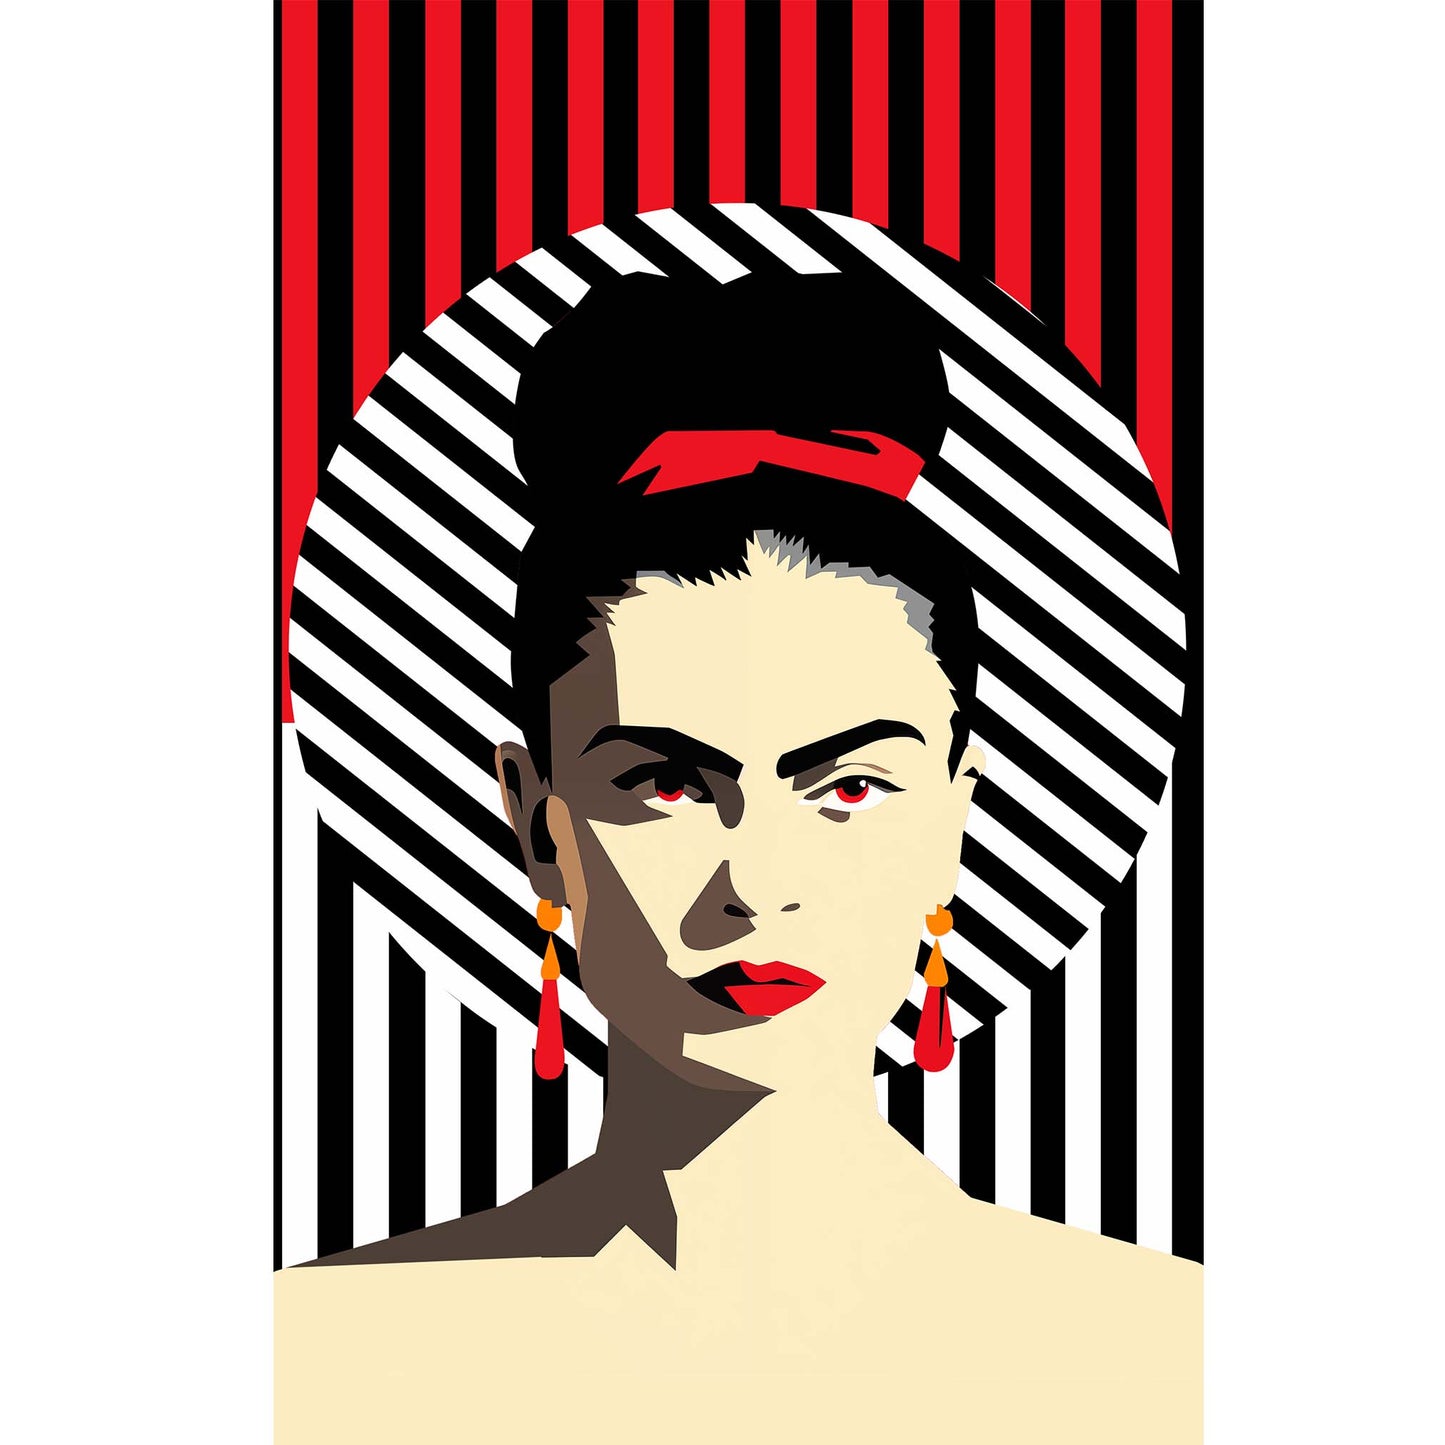 POP ART poster of Frida Kahlo